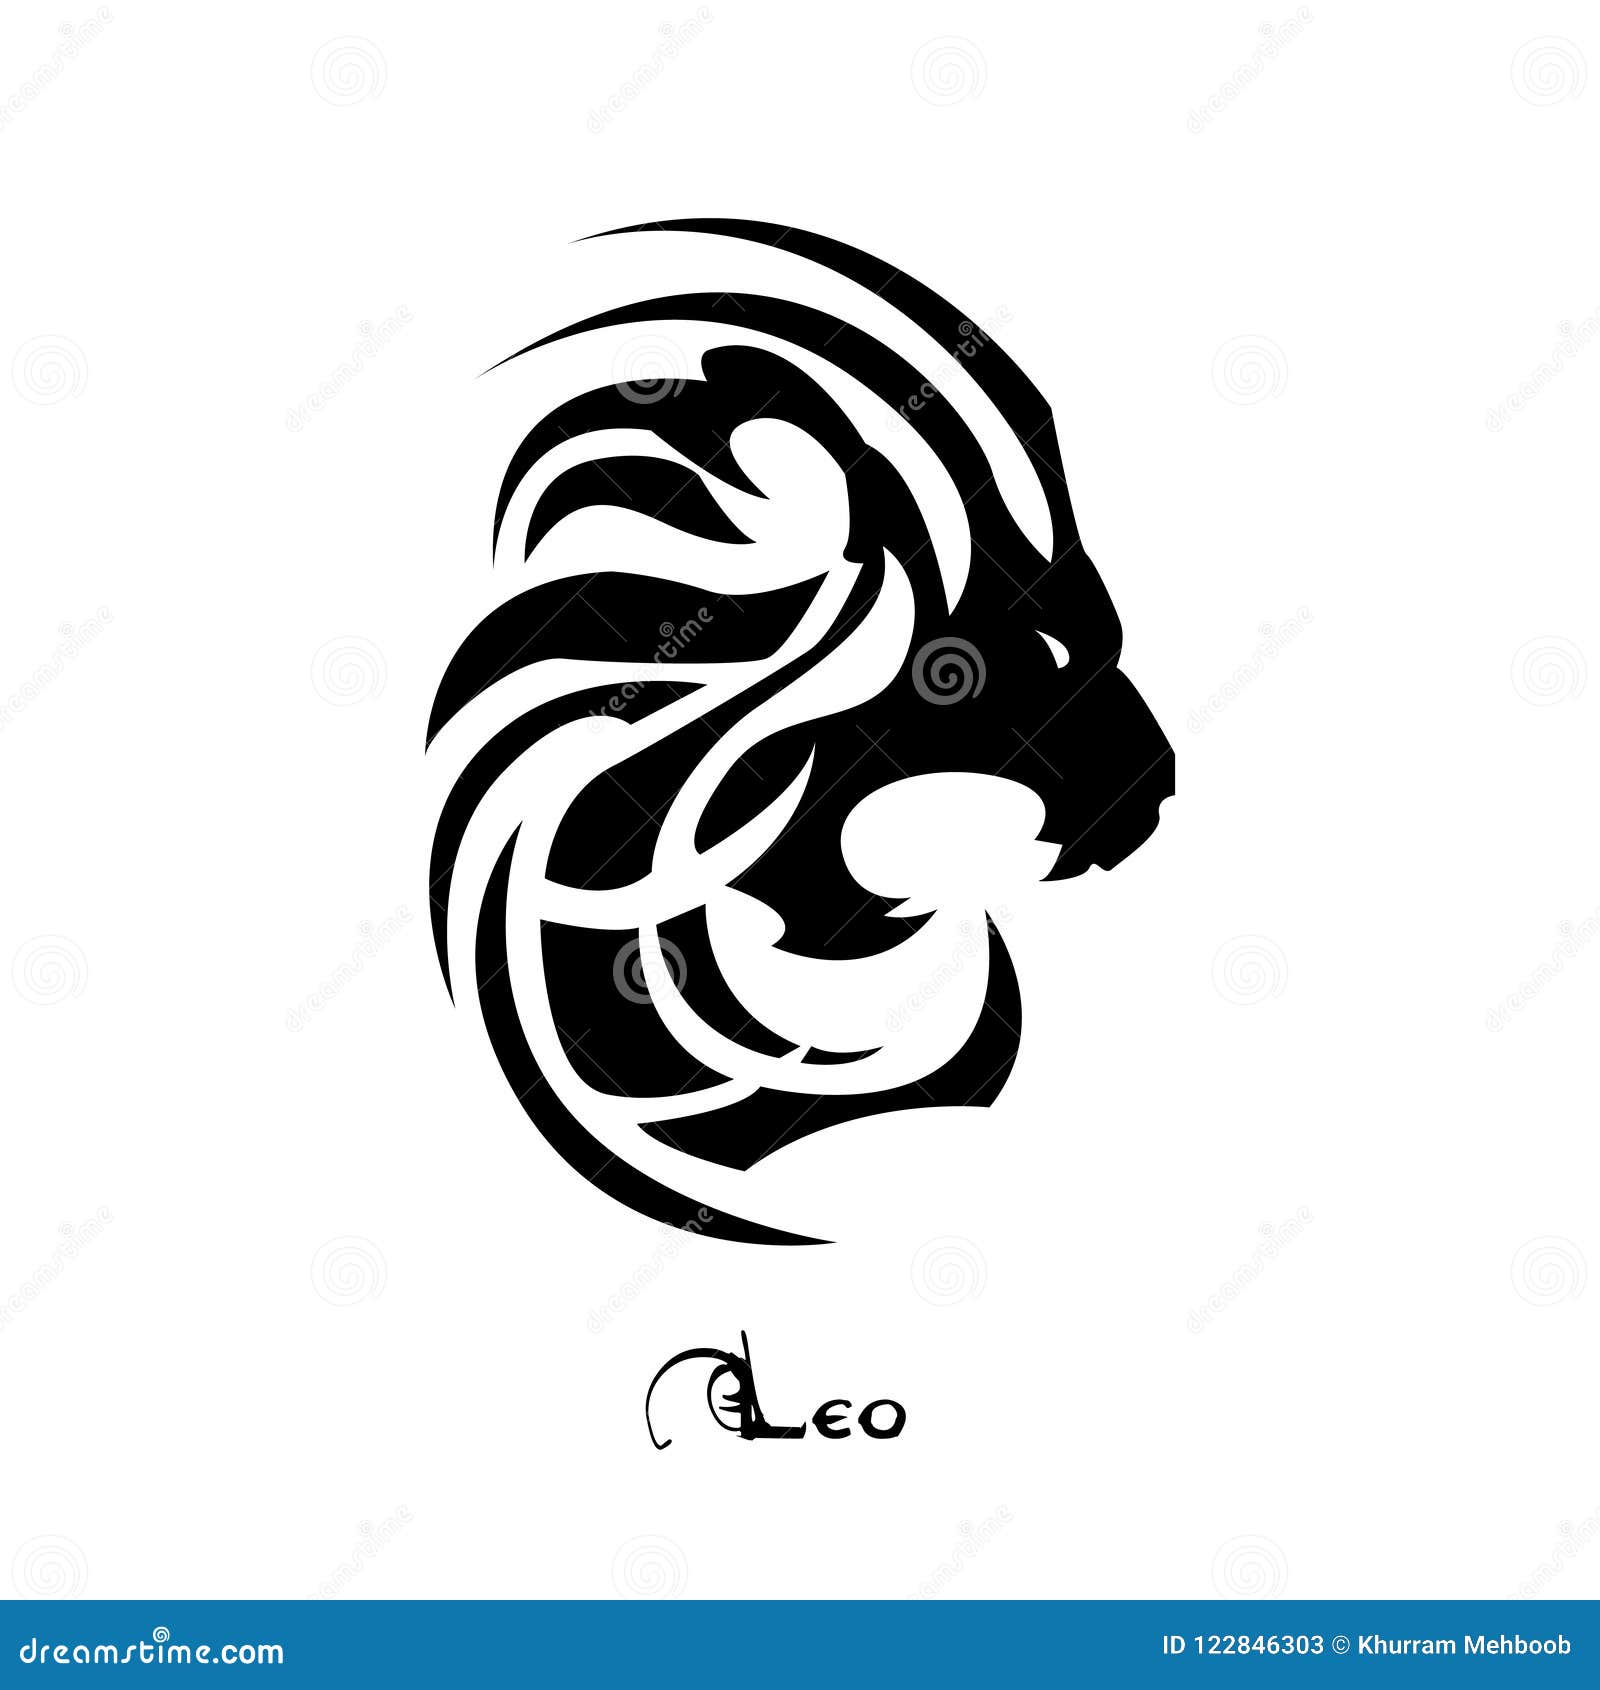 Leo Zodiac Sign Tattoo Style Stock Illustration - Illustration of aquarius, zodiac: 122846303